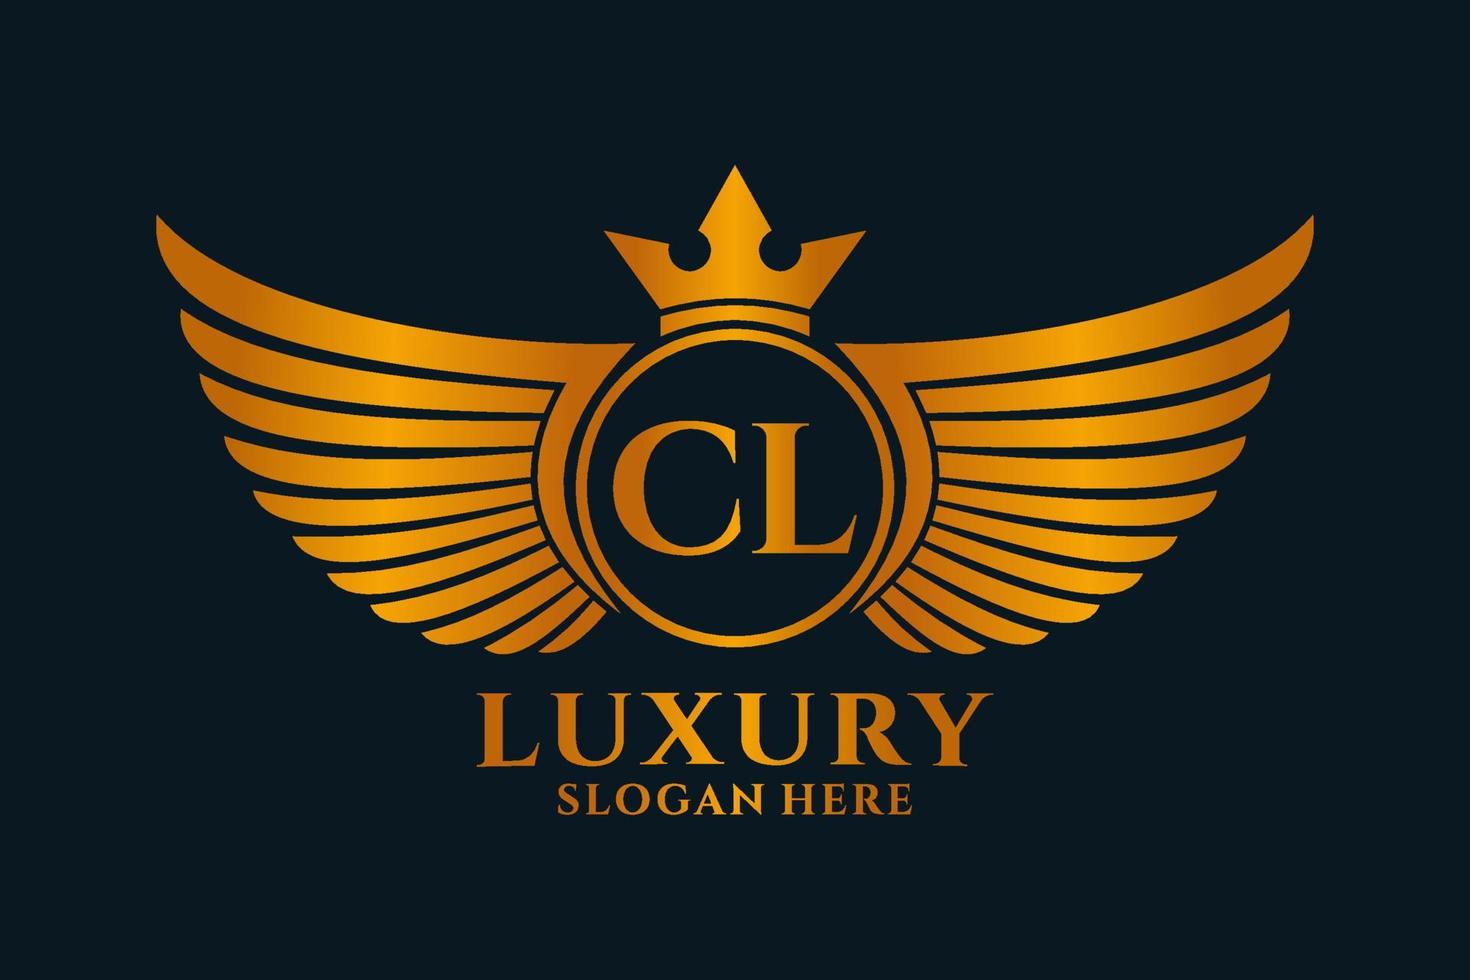 luxe Koninklijk vleugel brief cl kam goud kleur logo vector, zege logo, kam logo, vleugel logo, vector logo sjabloon.